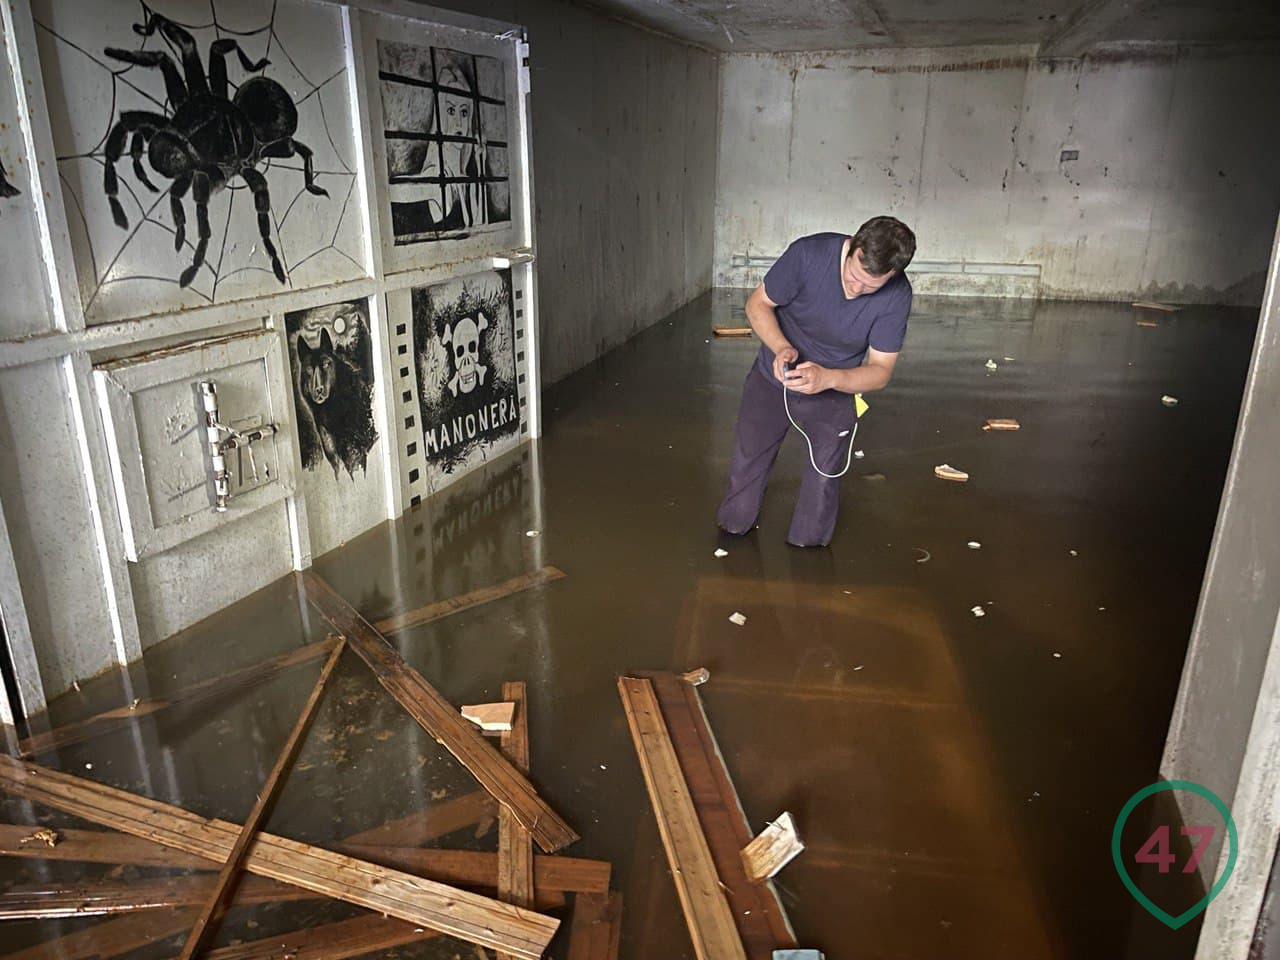 Flooded underground prison and graffiti gate